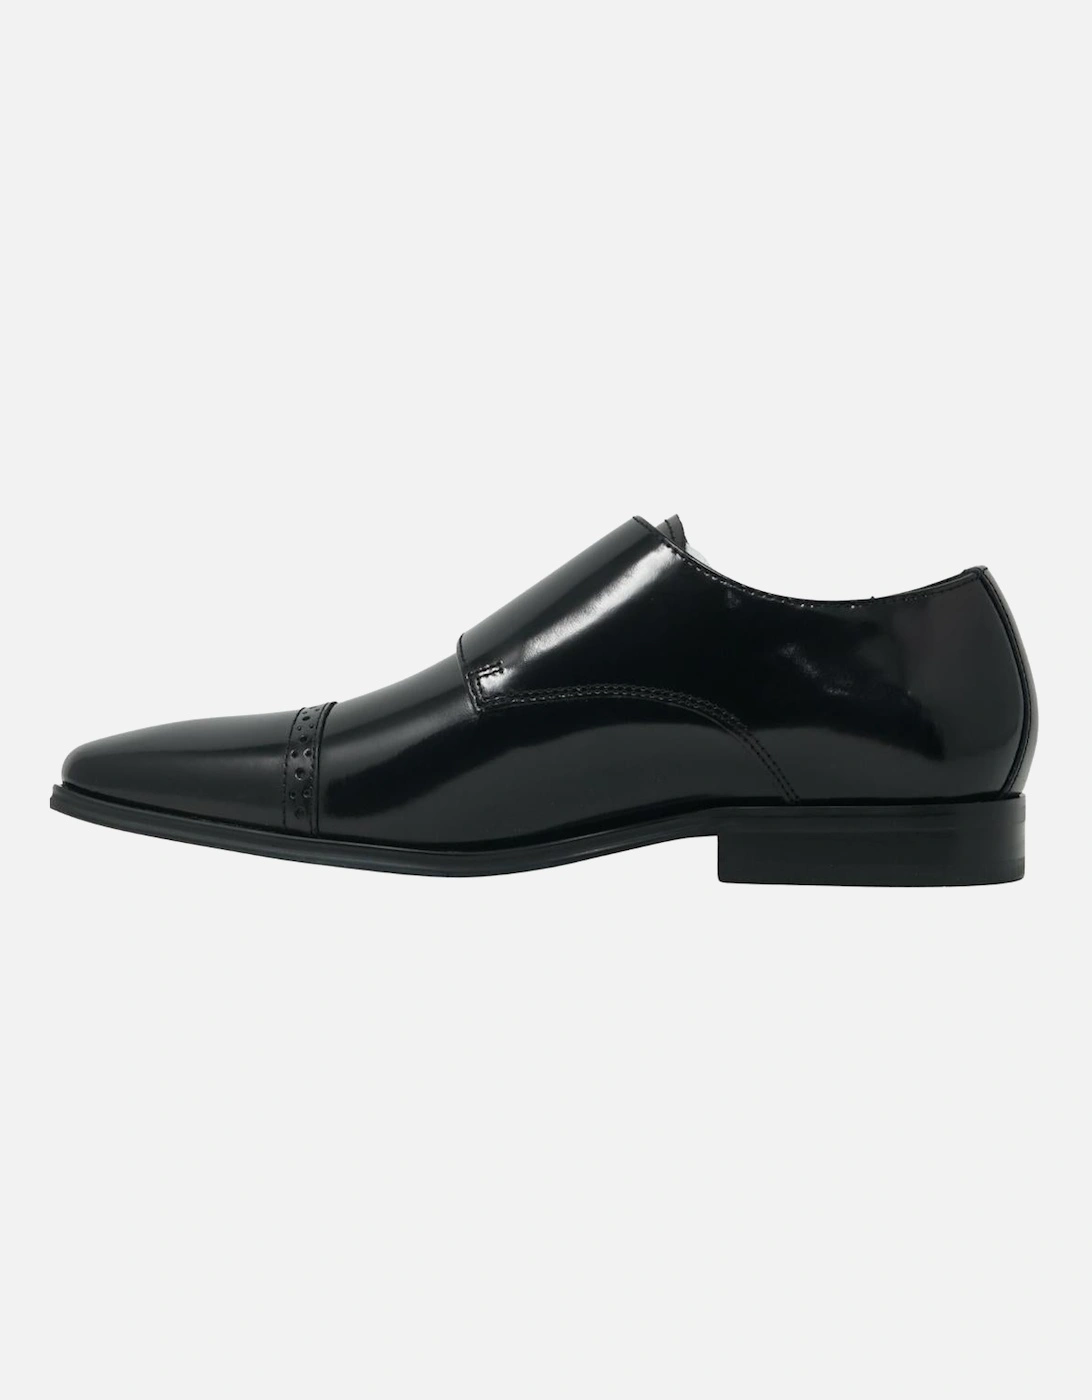 Monk Leather Black Shoes